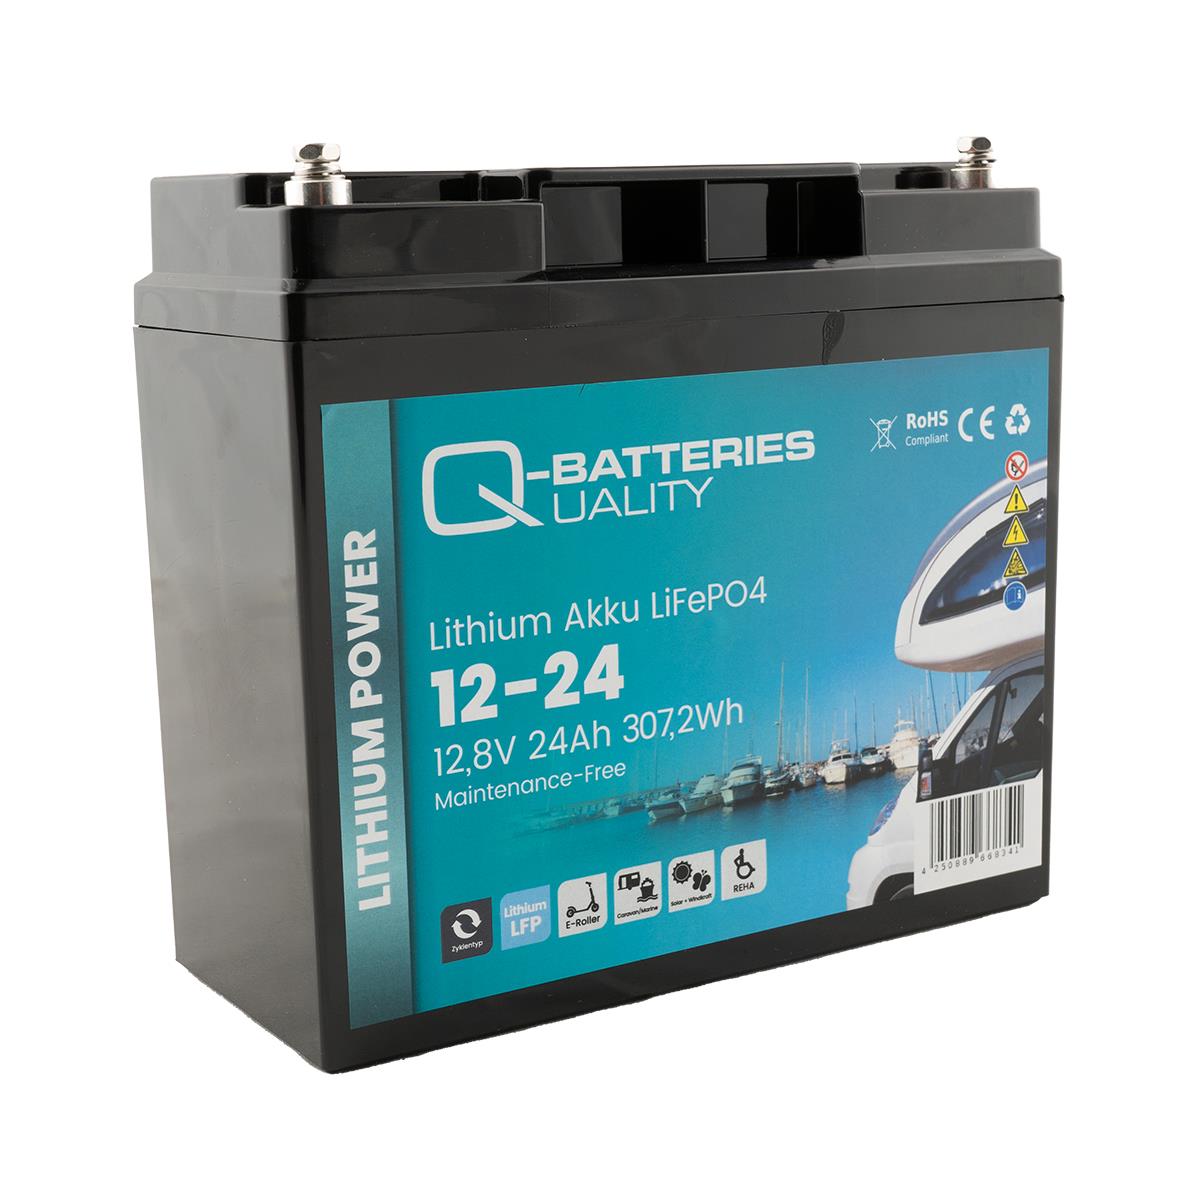 Q-Batteries Lithium Akku 12-24 12,8V 24Ah 307,2Wh LiFePO4 Batterie   